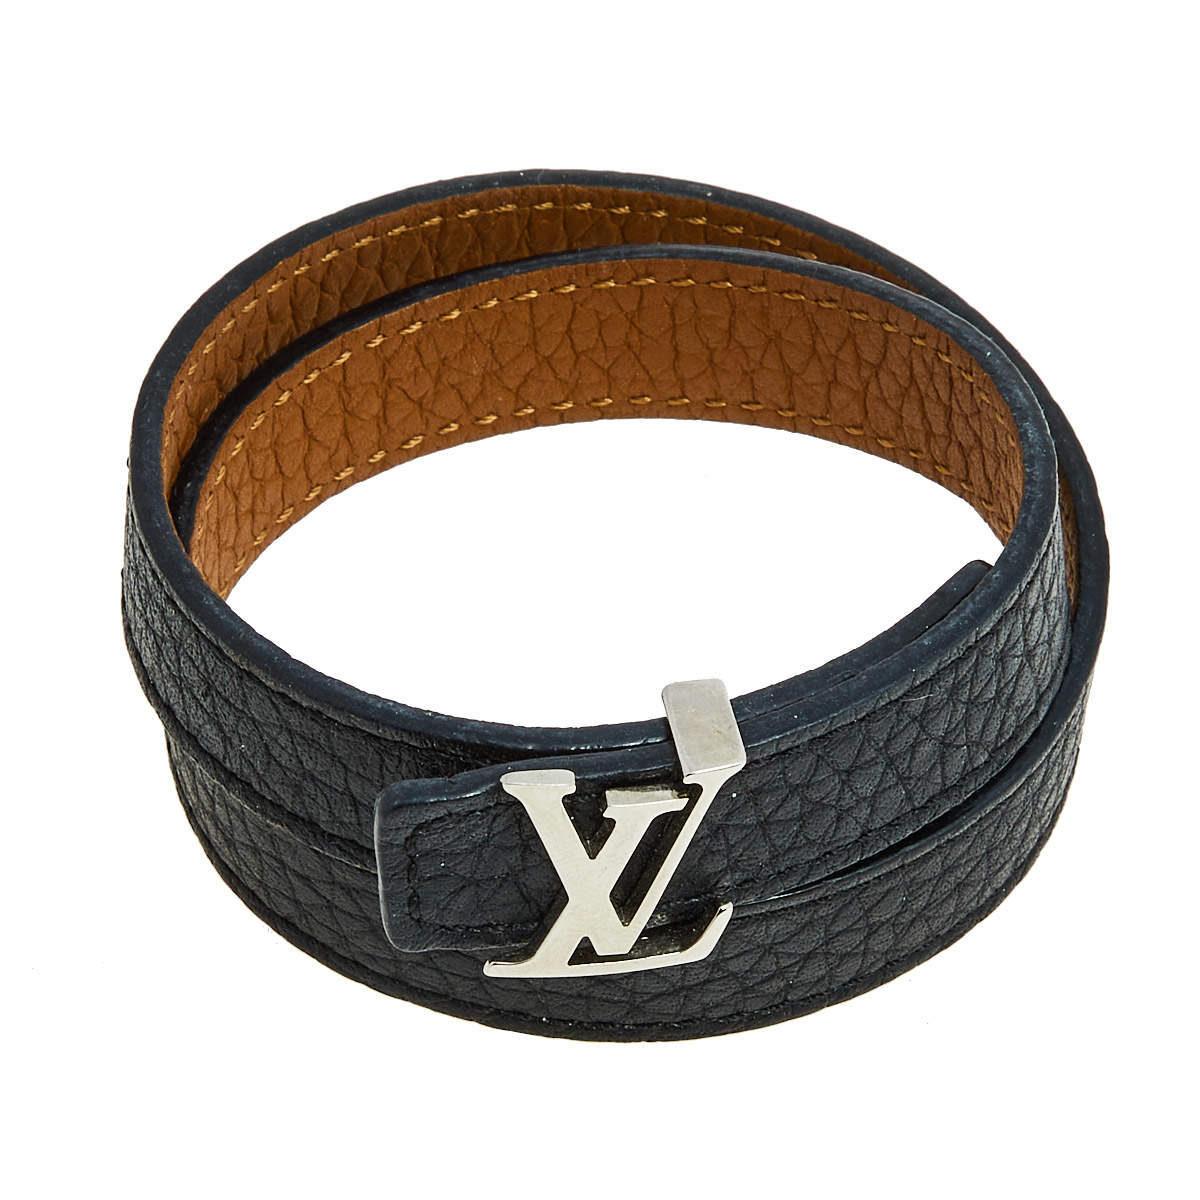 MATAology 歐洲精品代購- Louis Vuitton fasten your LV bracelet 夏天手上一定不能沒有飾品.  Line帳號：@ngz0073s（連同@一起） IG：www.instagram.com